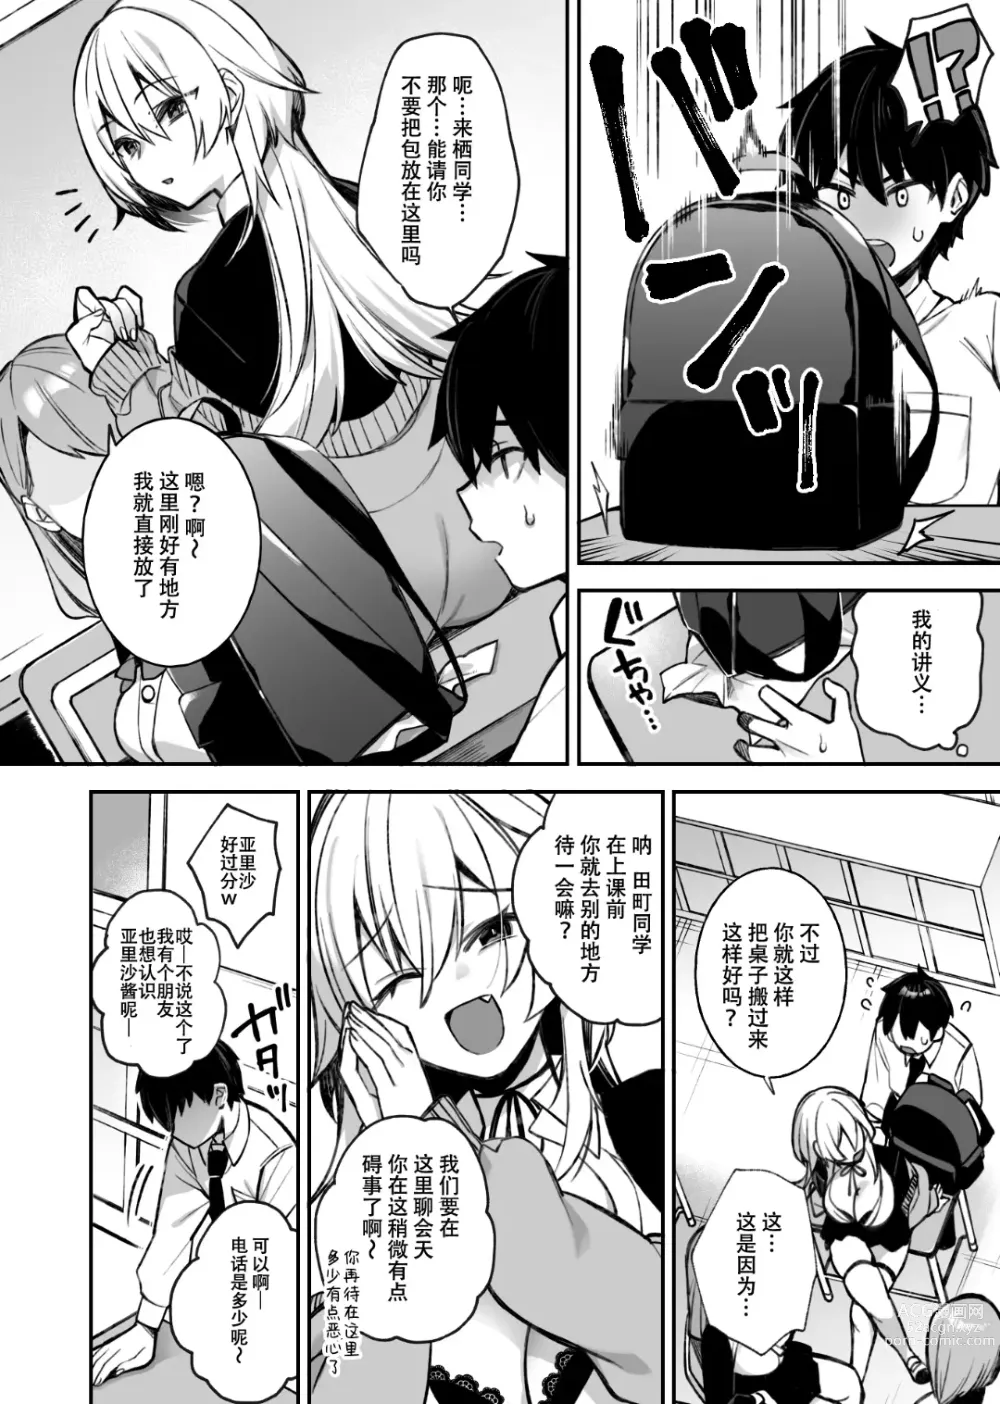 Page 7 of manga Hypnosis 1 (uncensored)